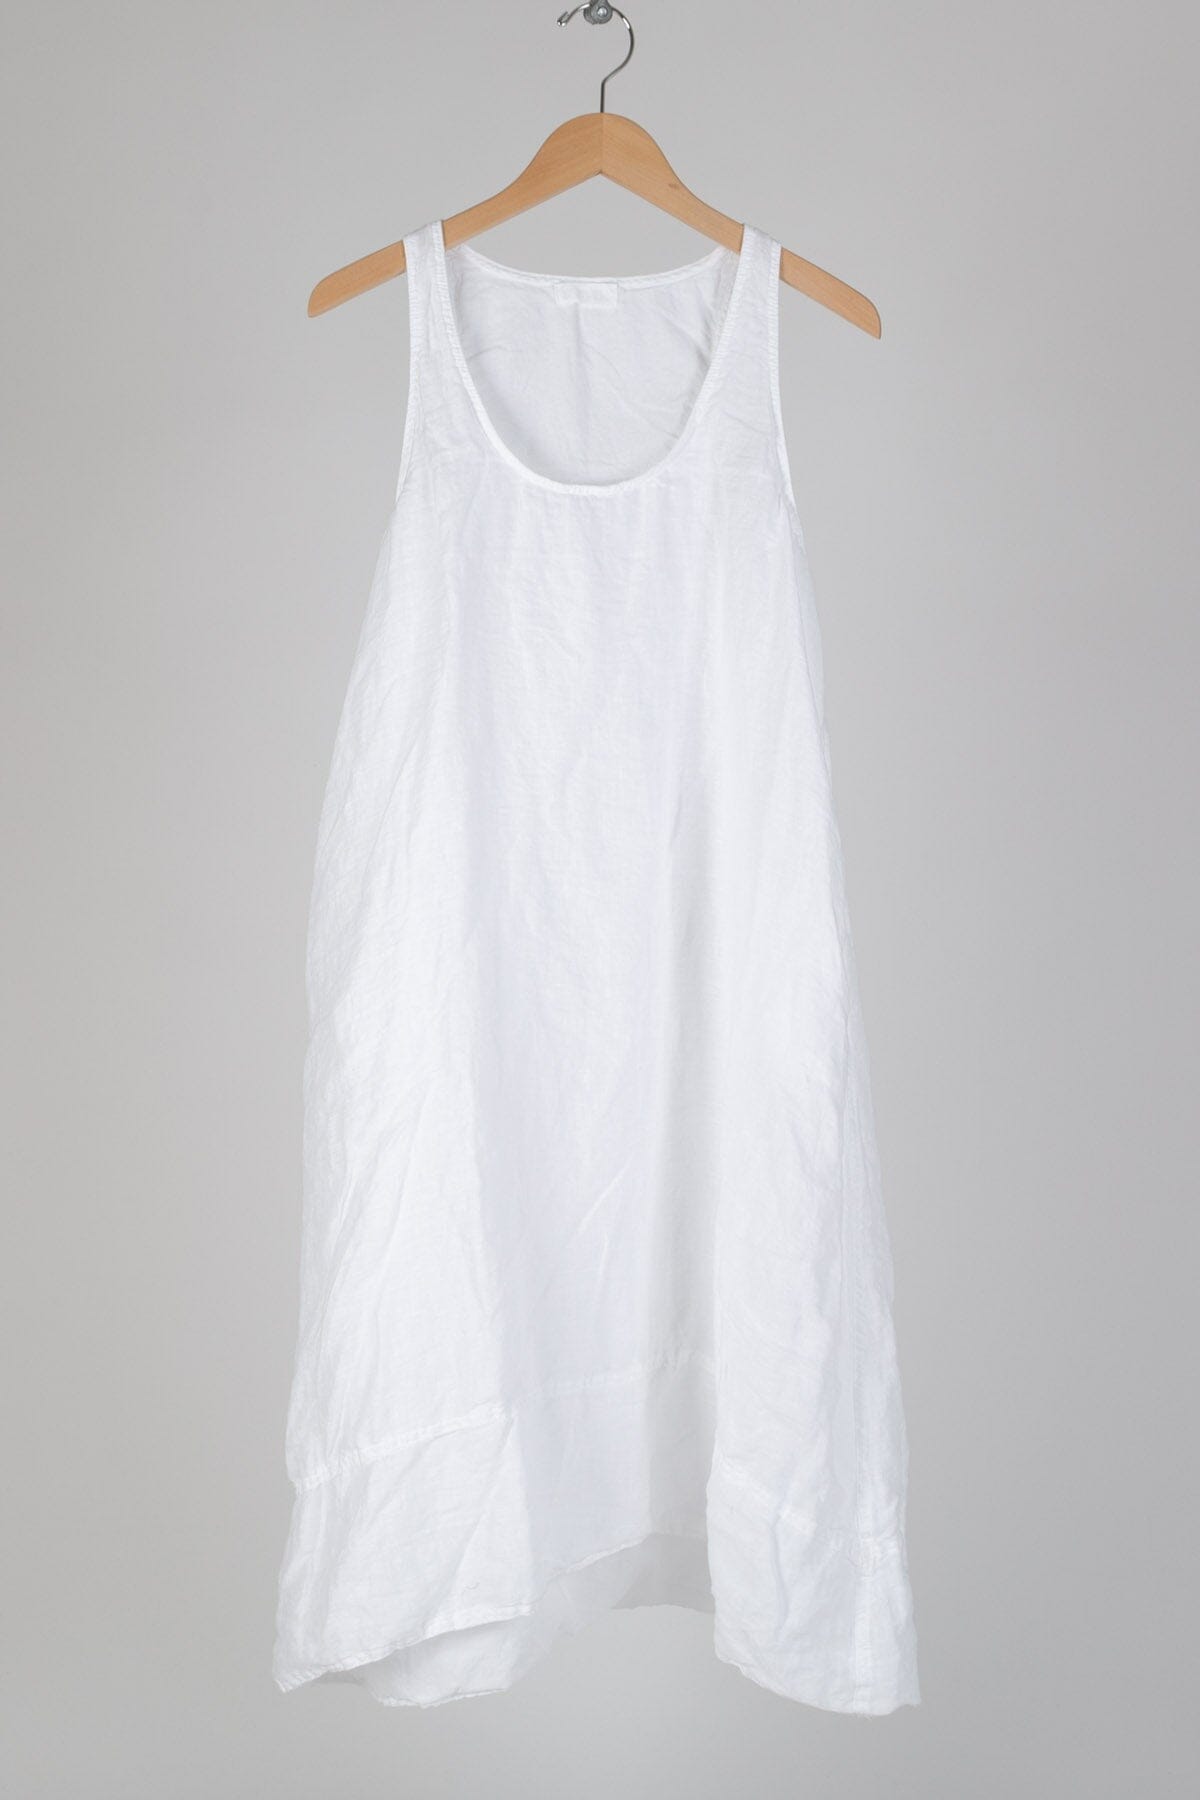 Freida - Linen S17 - Solid Linen Dresses CP Shades white